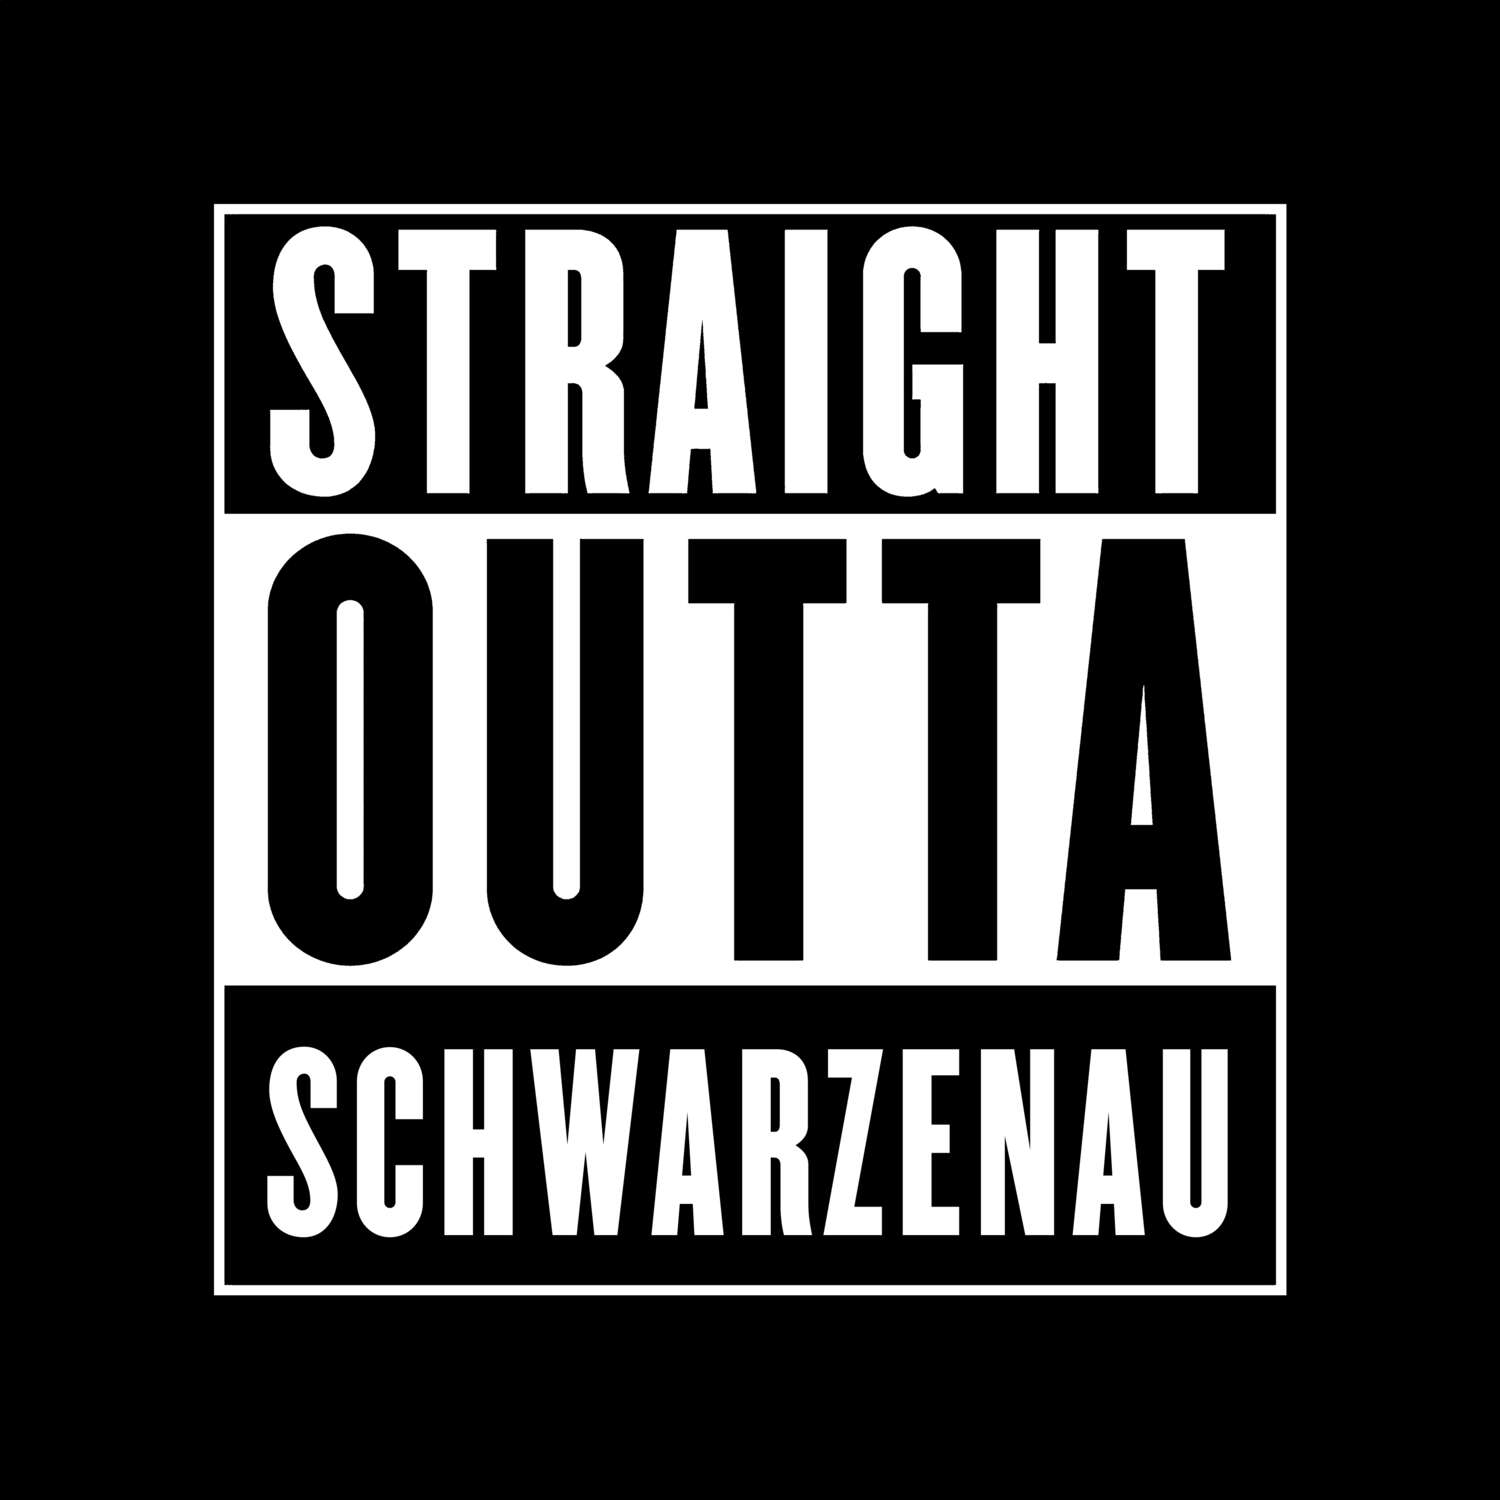 Schwarzenau T-Shirt »Straight Outta«